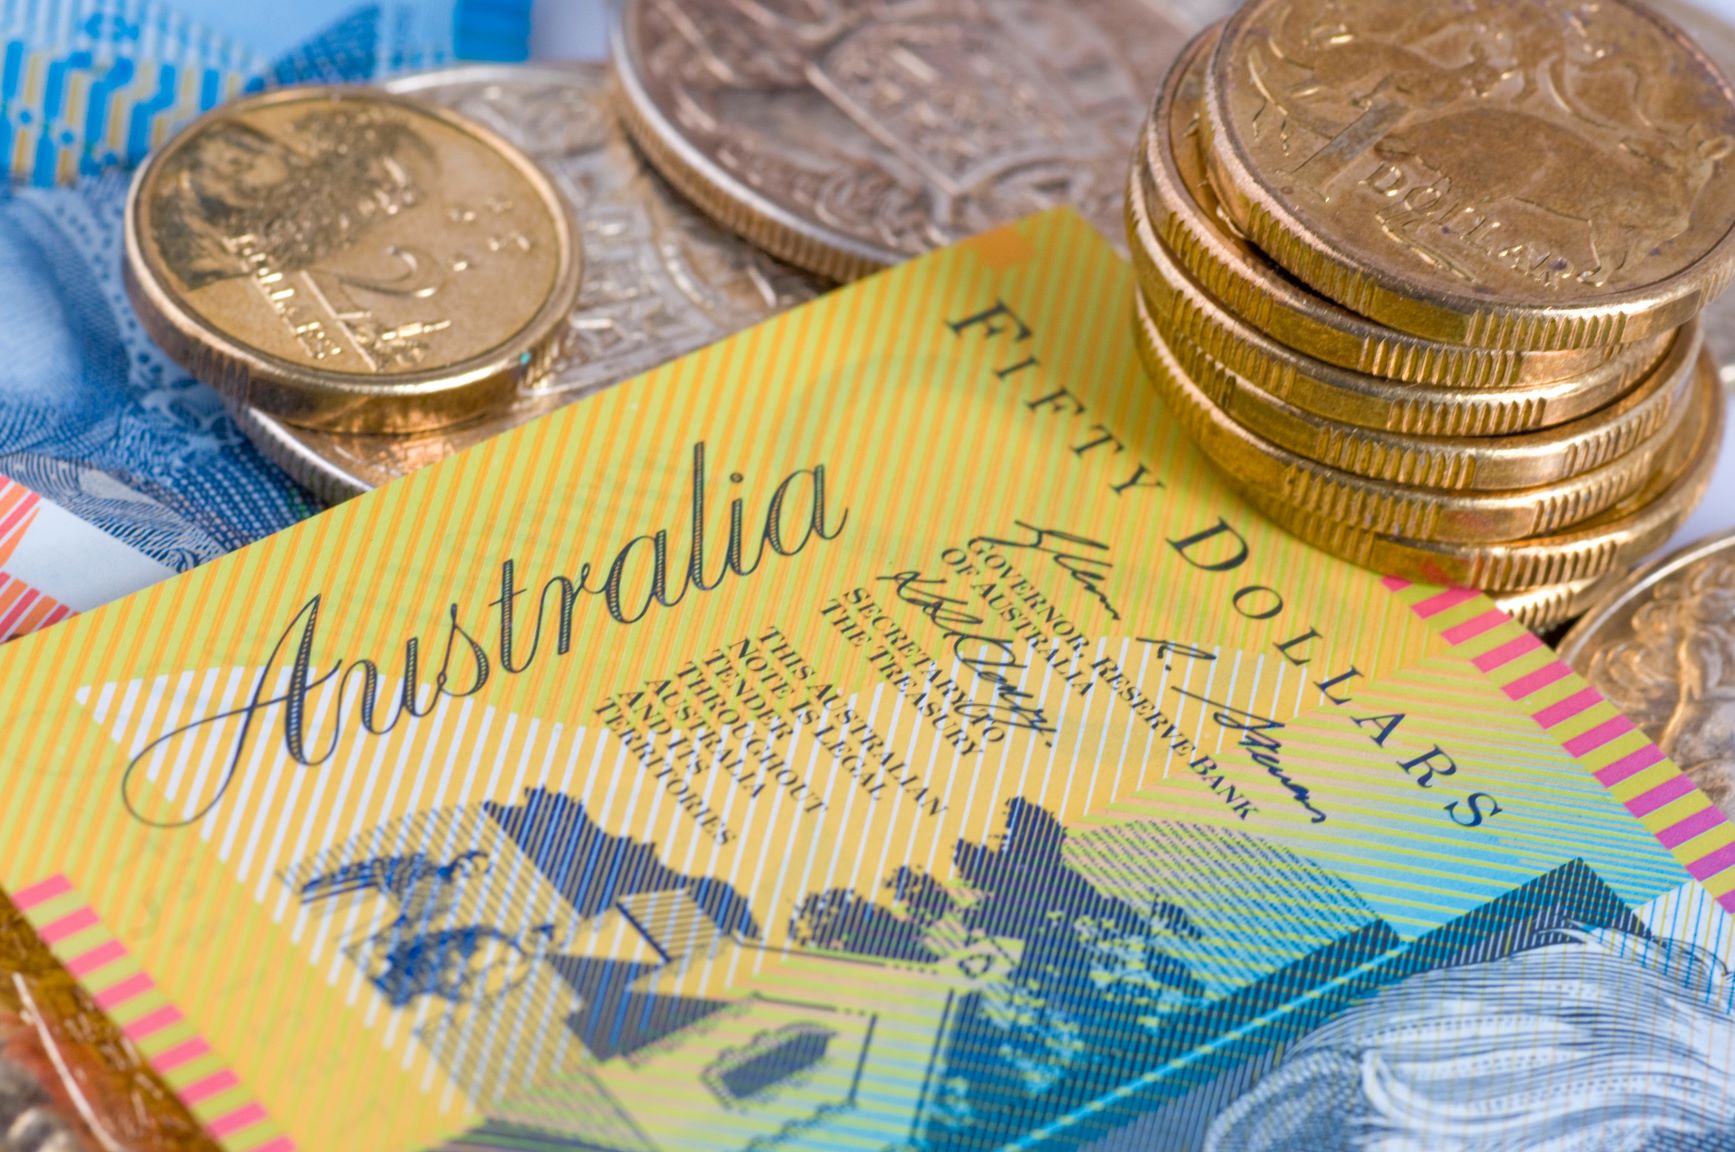 Reserve Bank of Australia’s Dovish Statement Weighs on Australian Dollar